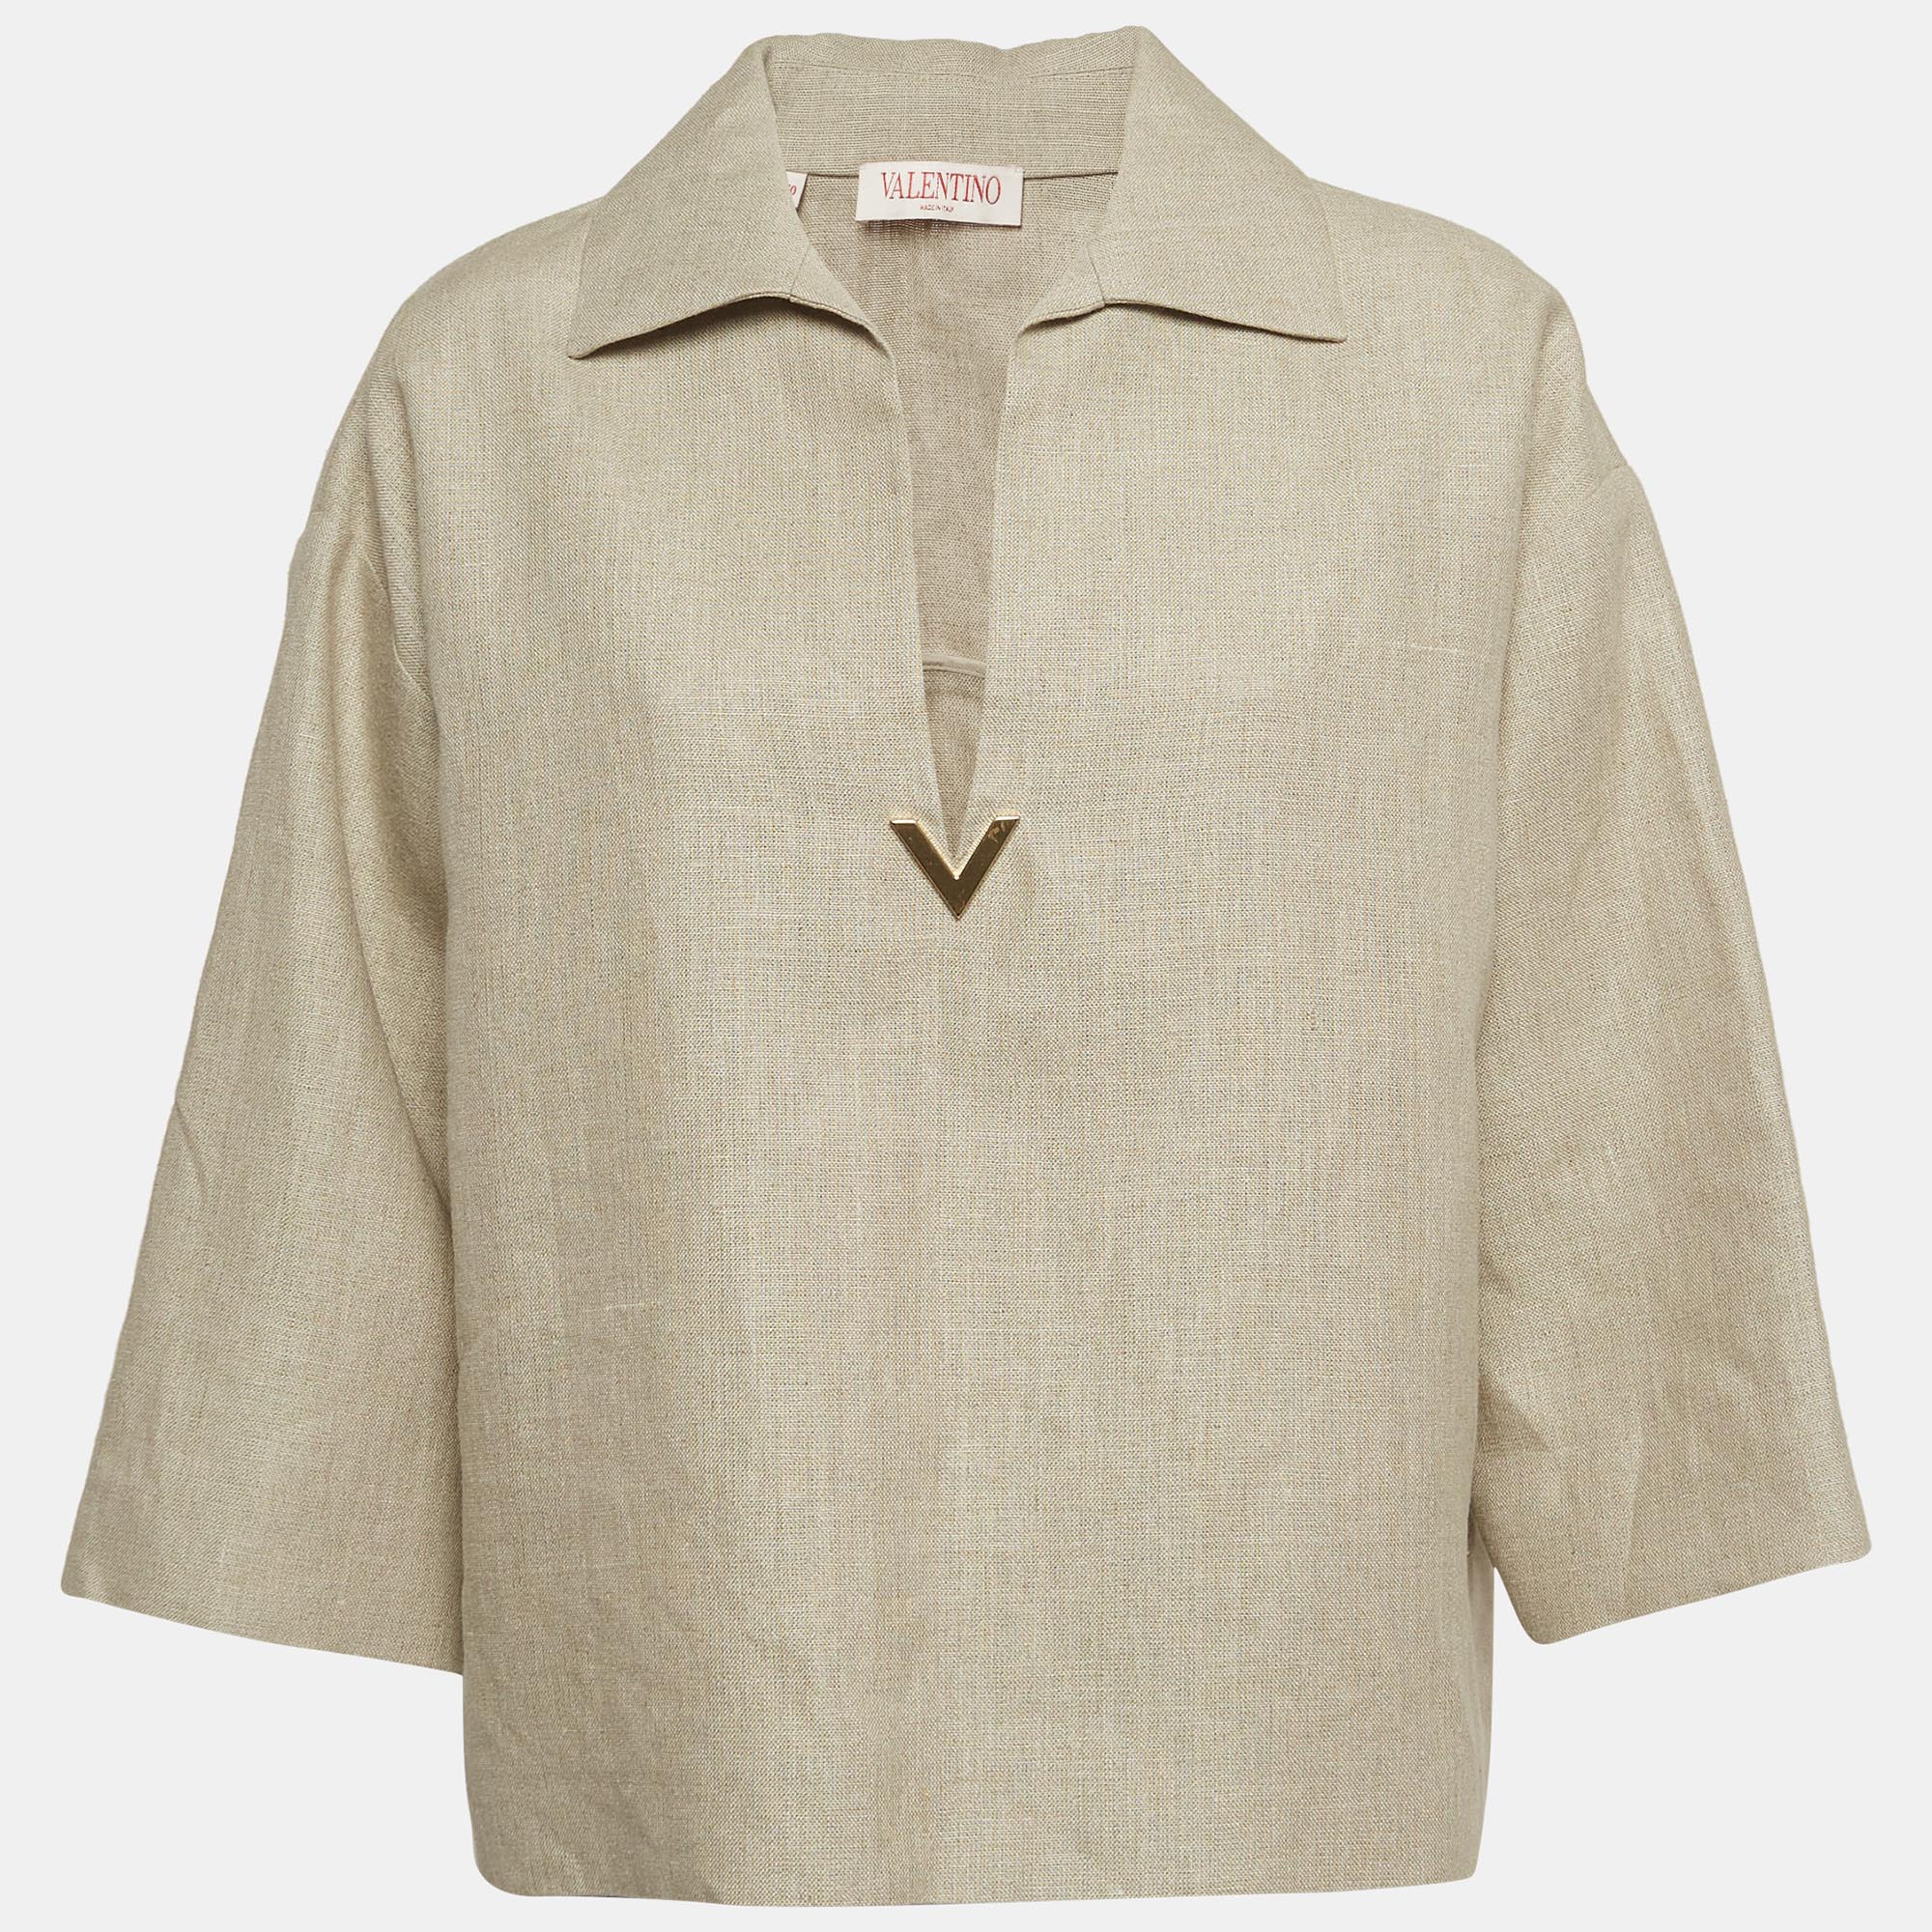 Valentino beige linen canvas embellished blouse s